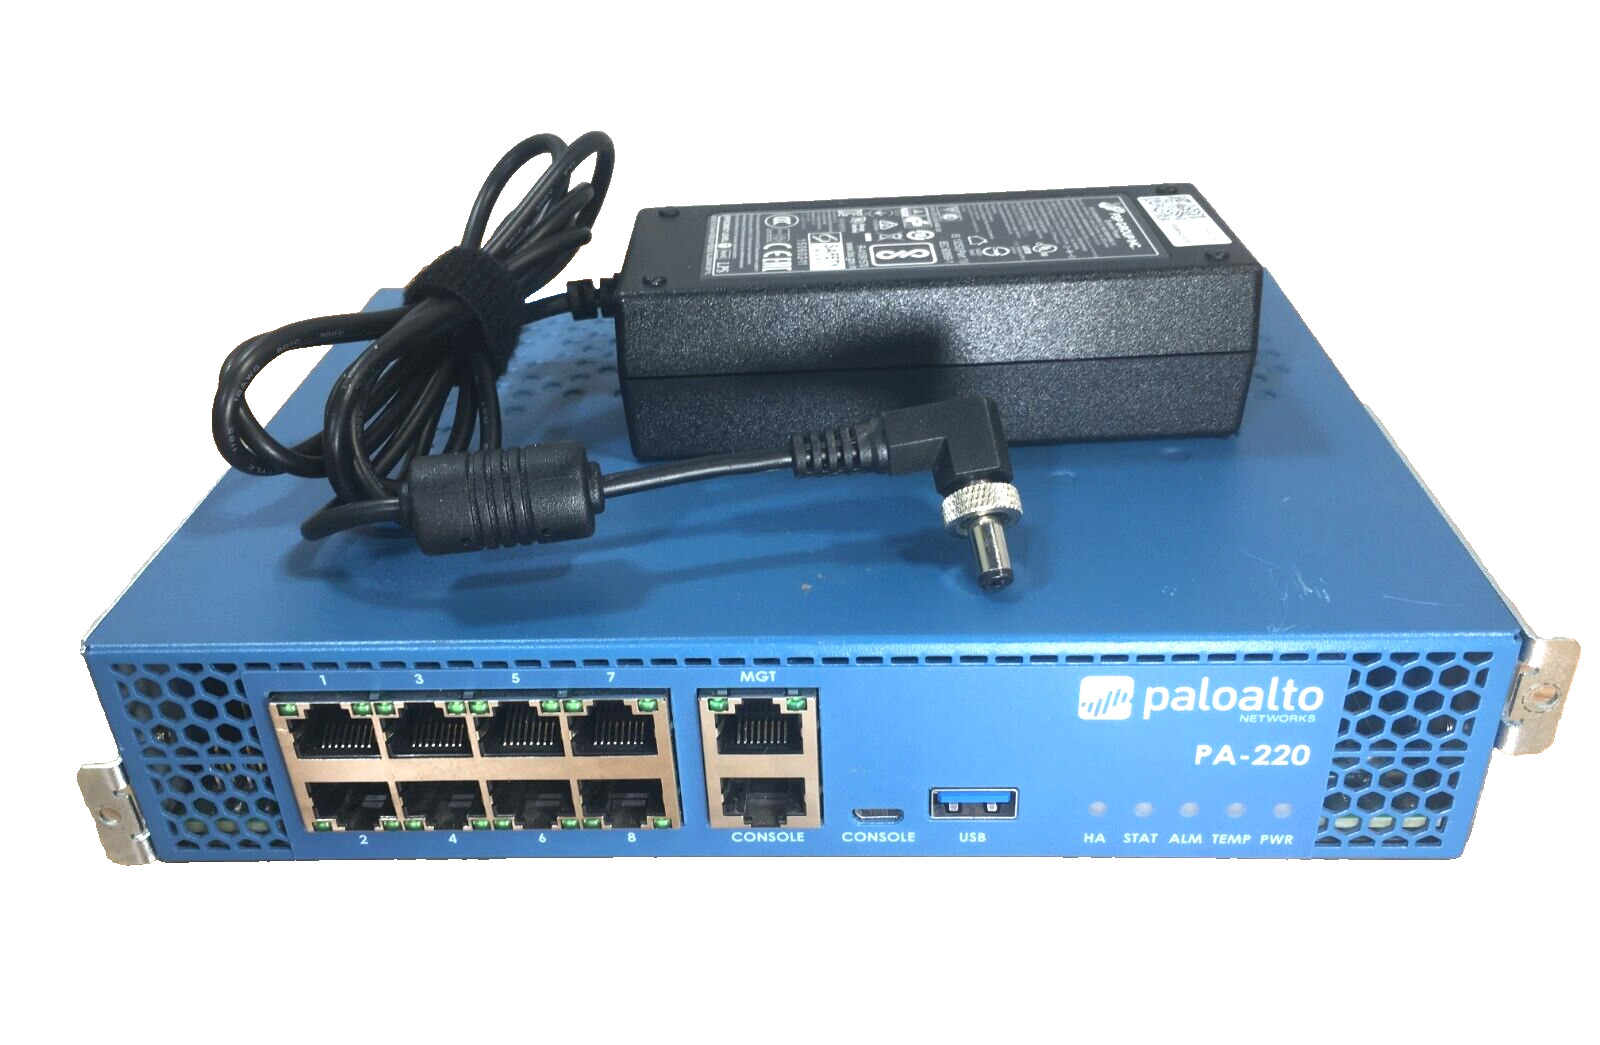 Palo Alto PA-220 Next-Gen Firewall 520-000309-00J w/ Power adapter